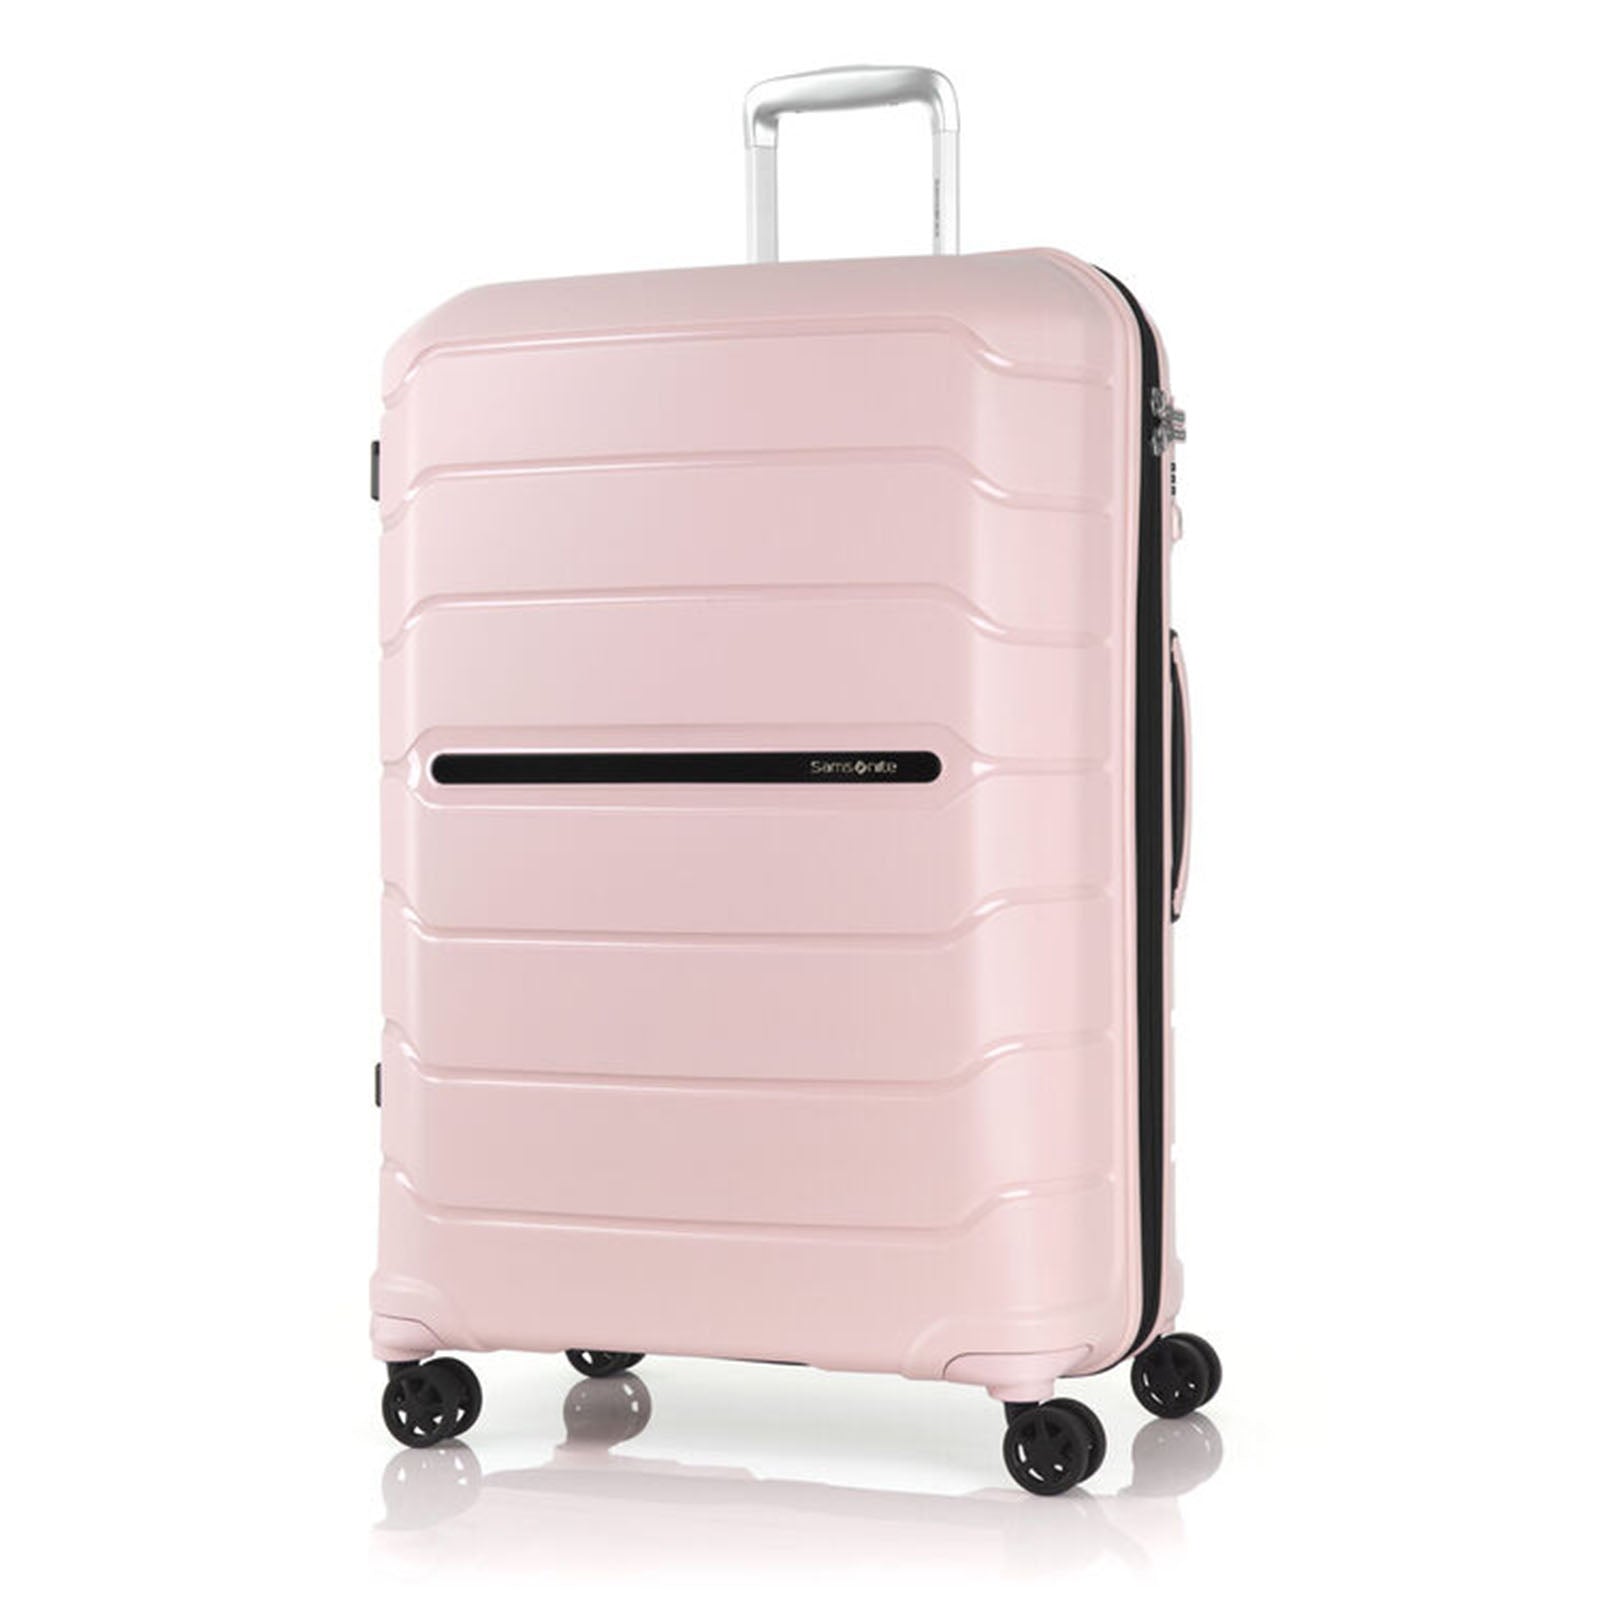 Samsonite-Oc2lite-75cm-Suitcase-Soft-Pink-Front-Angle